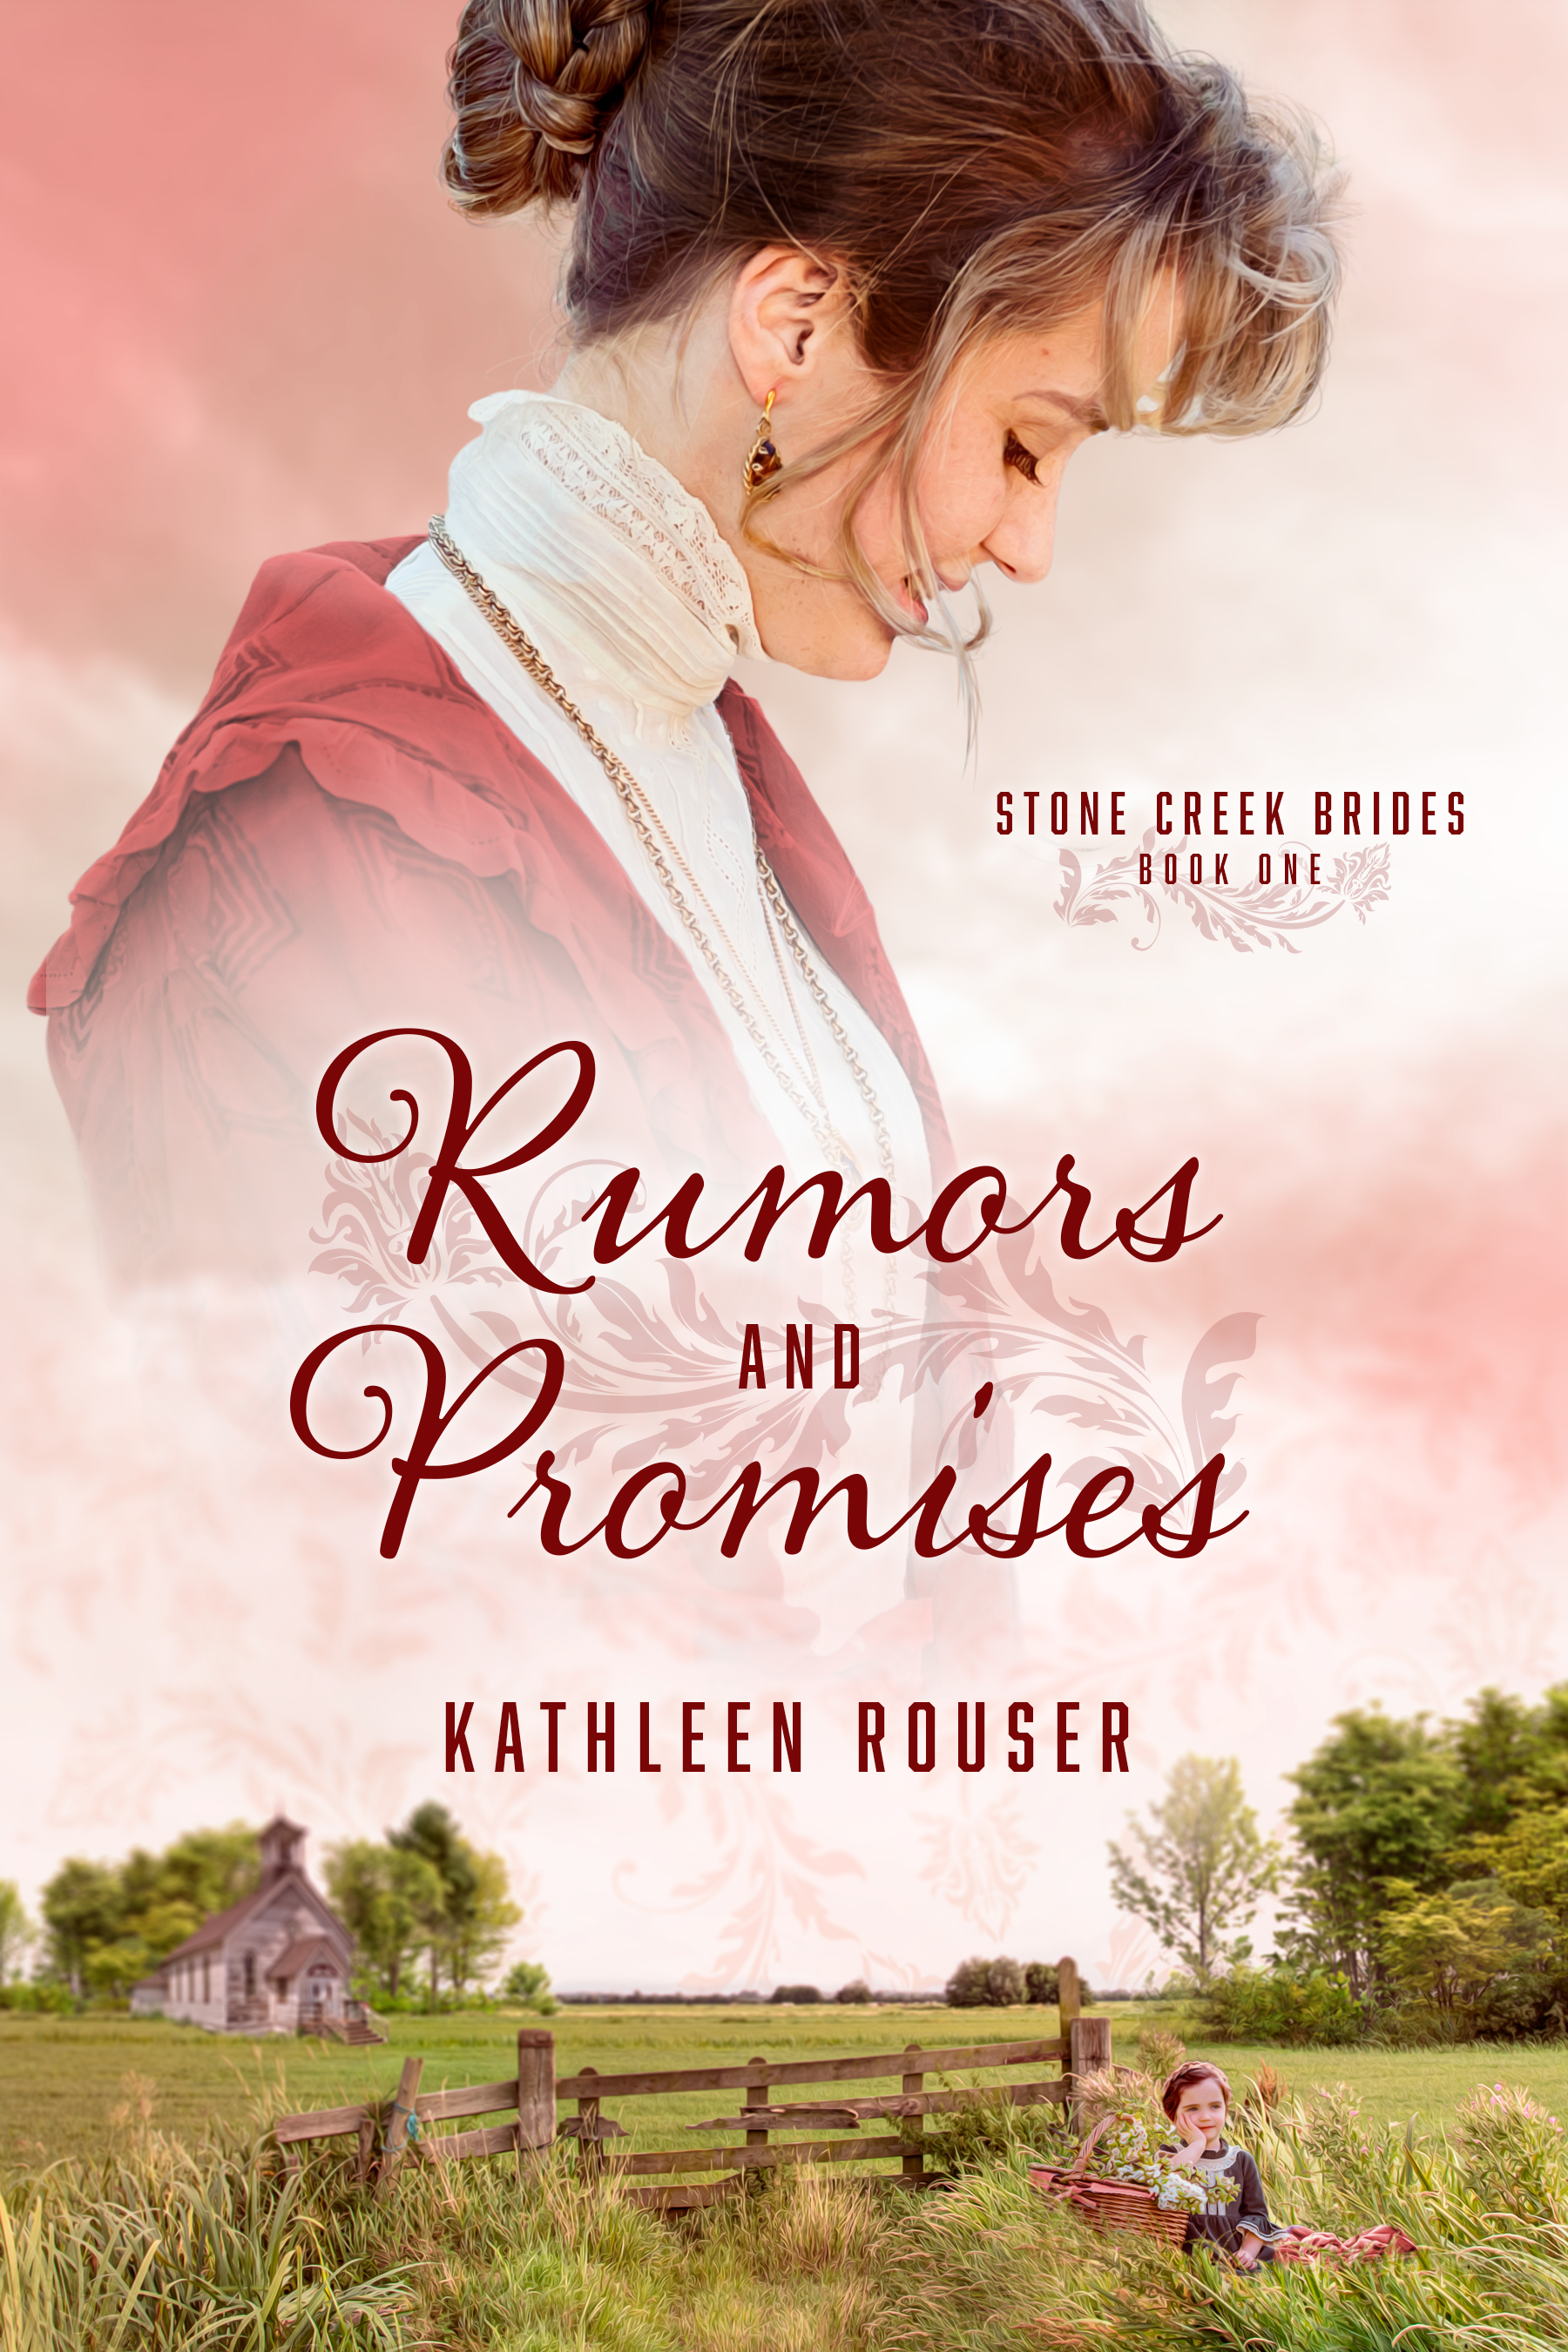 Rumors and Promises by Kathleen Rouser